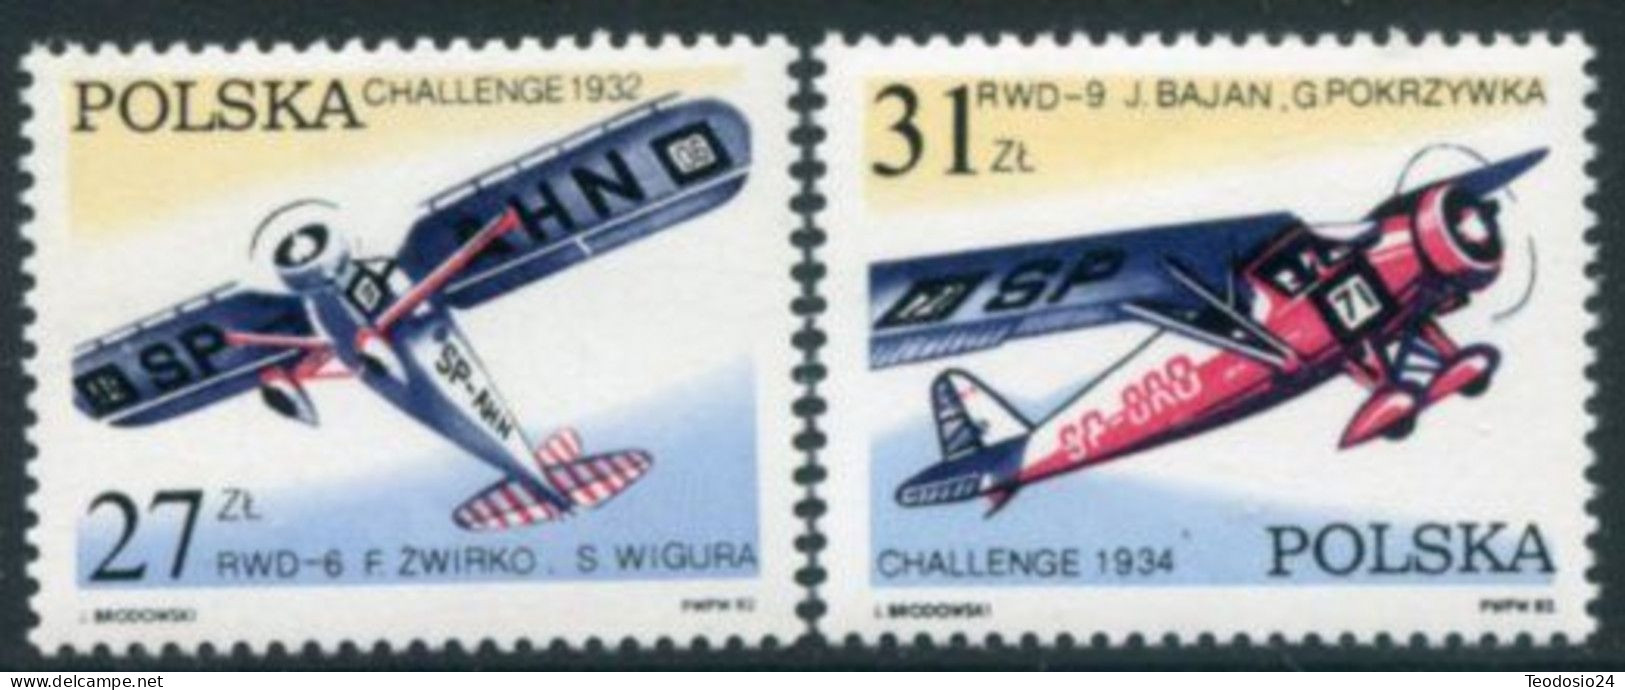 POLAND 1982  Michel 2806-07 ** - Unused Stamps